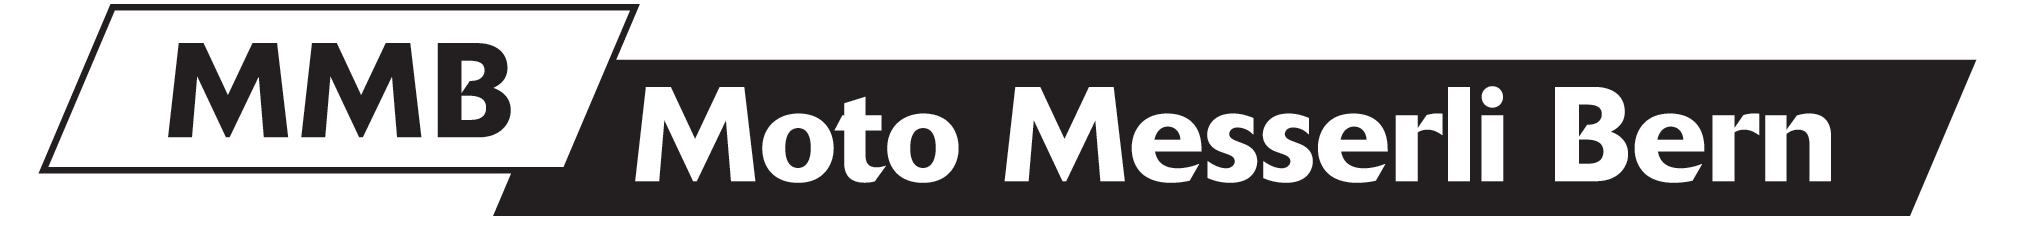 MMB Moto Messerli Bern AG